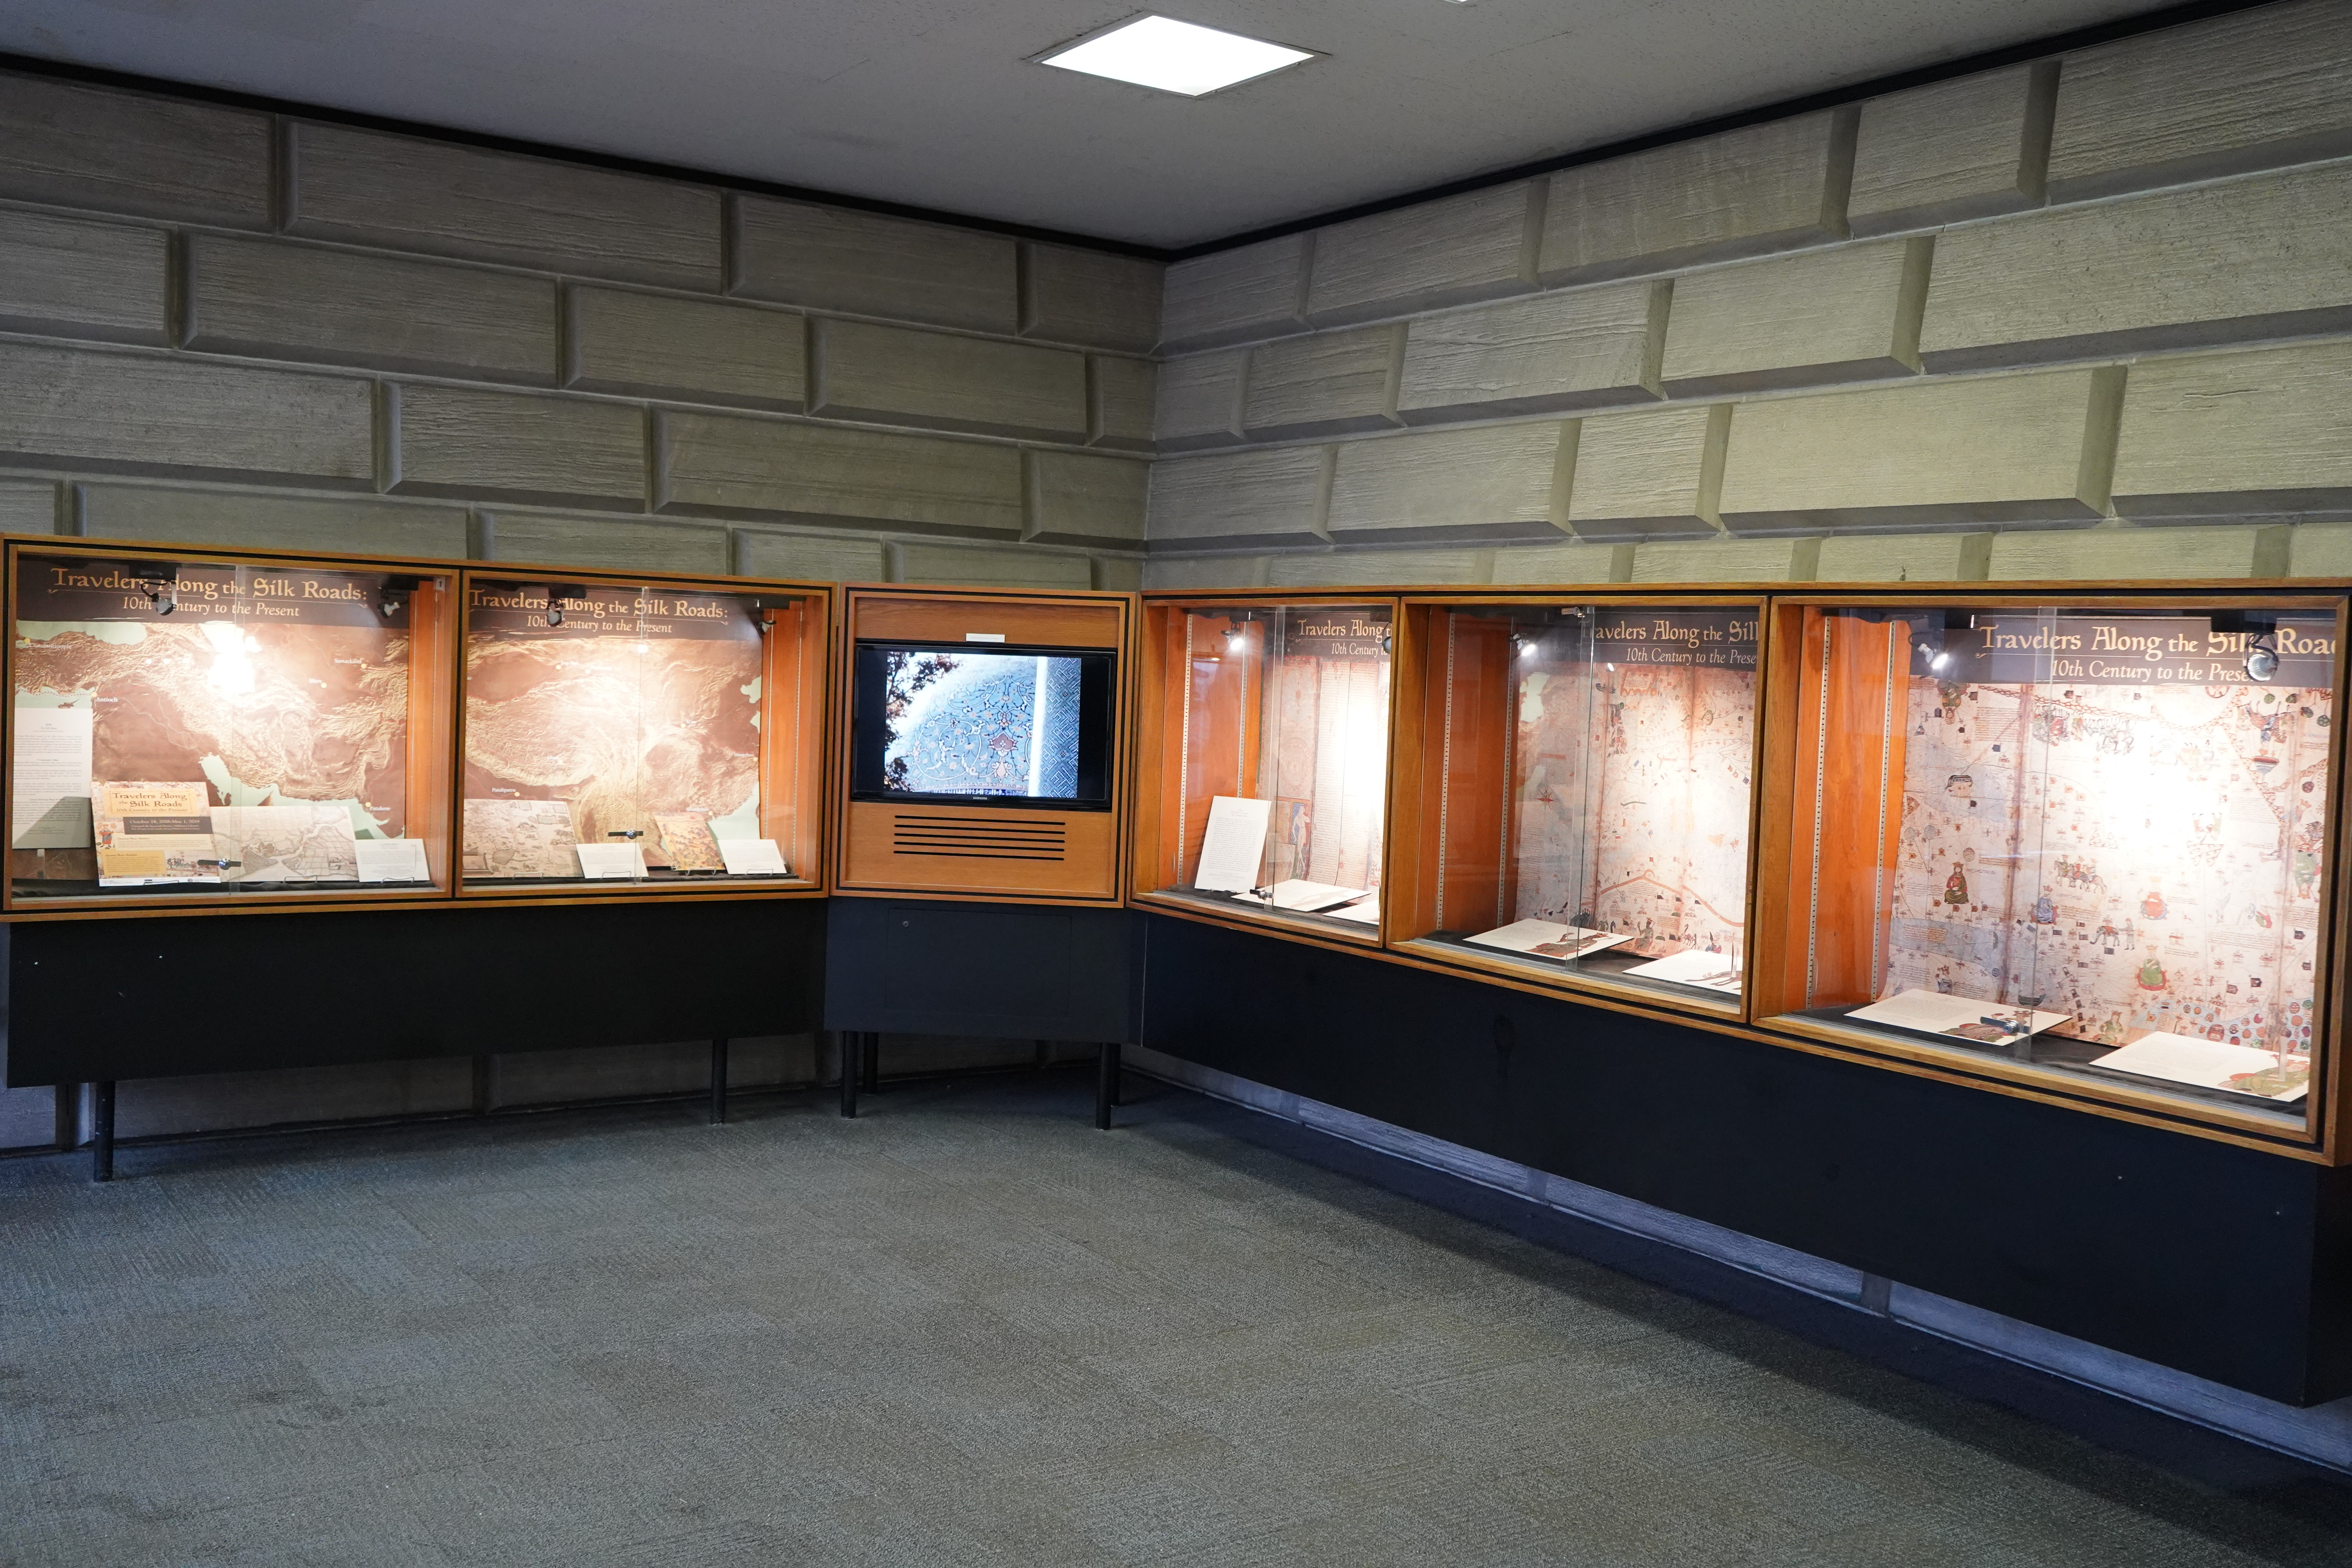 Ground Floor Cases of Exhibit